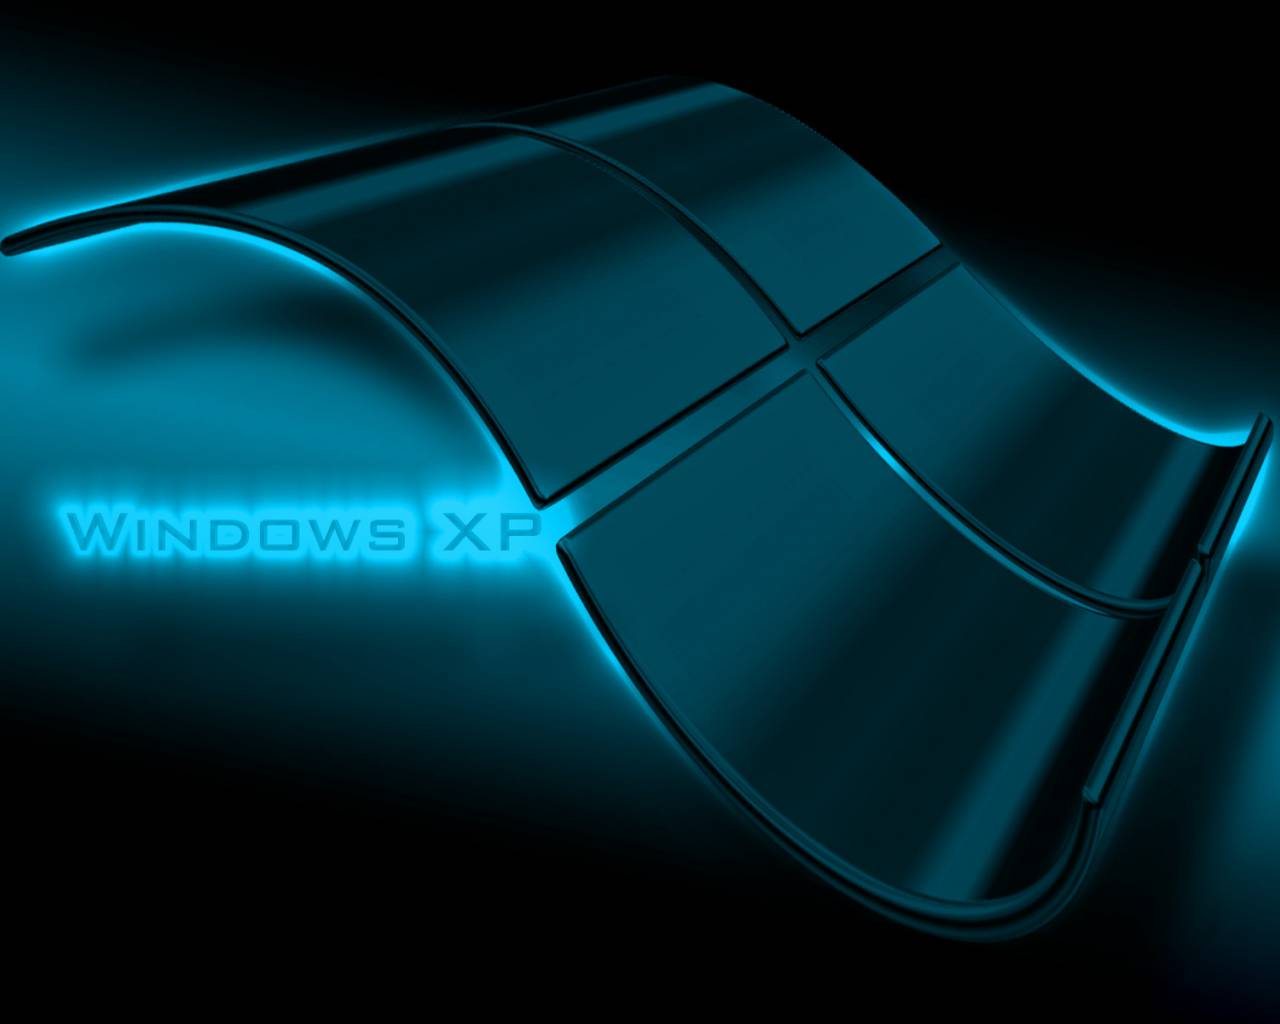 windows xp, technology